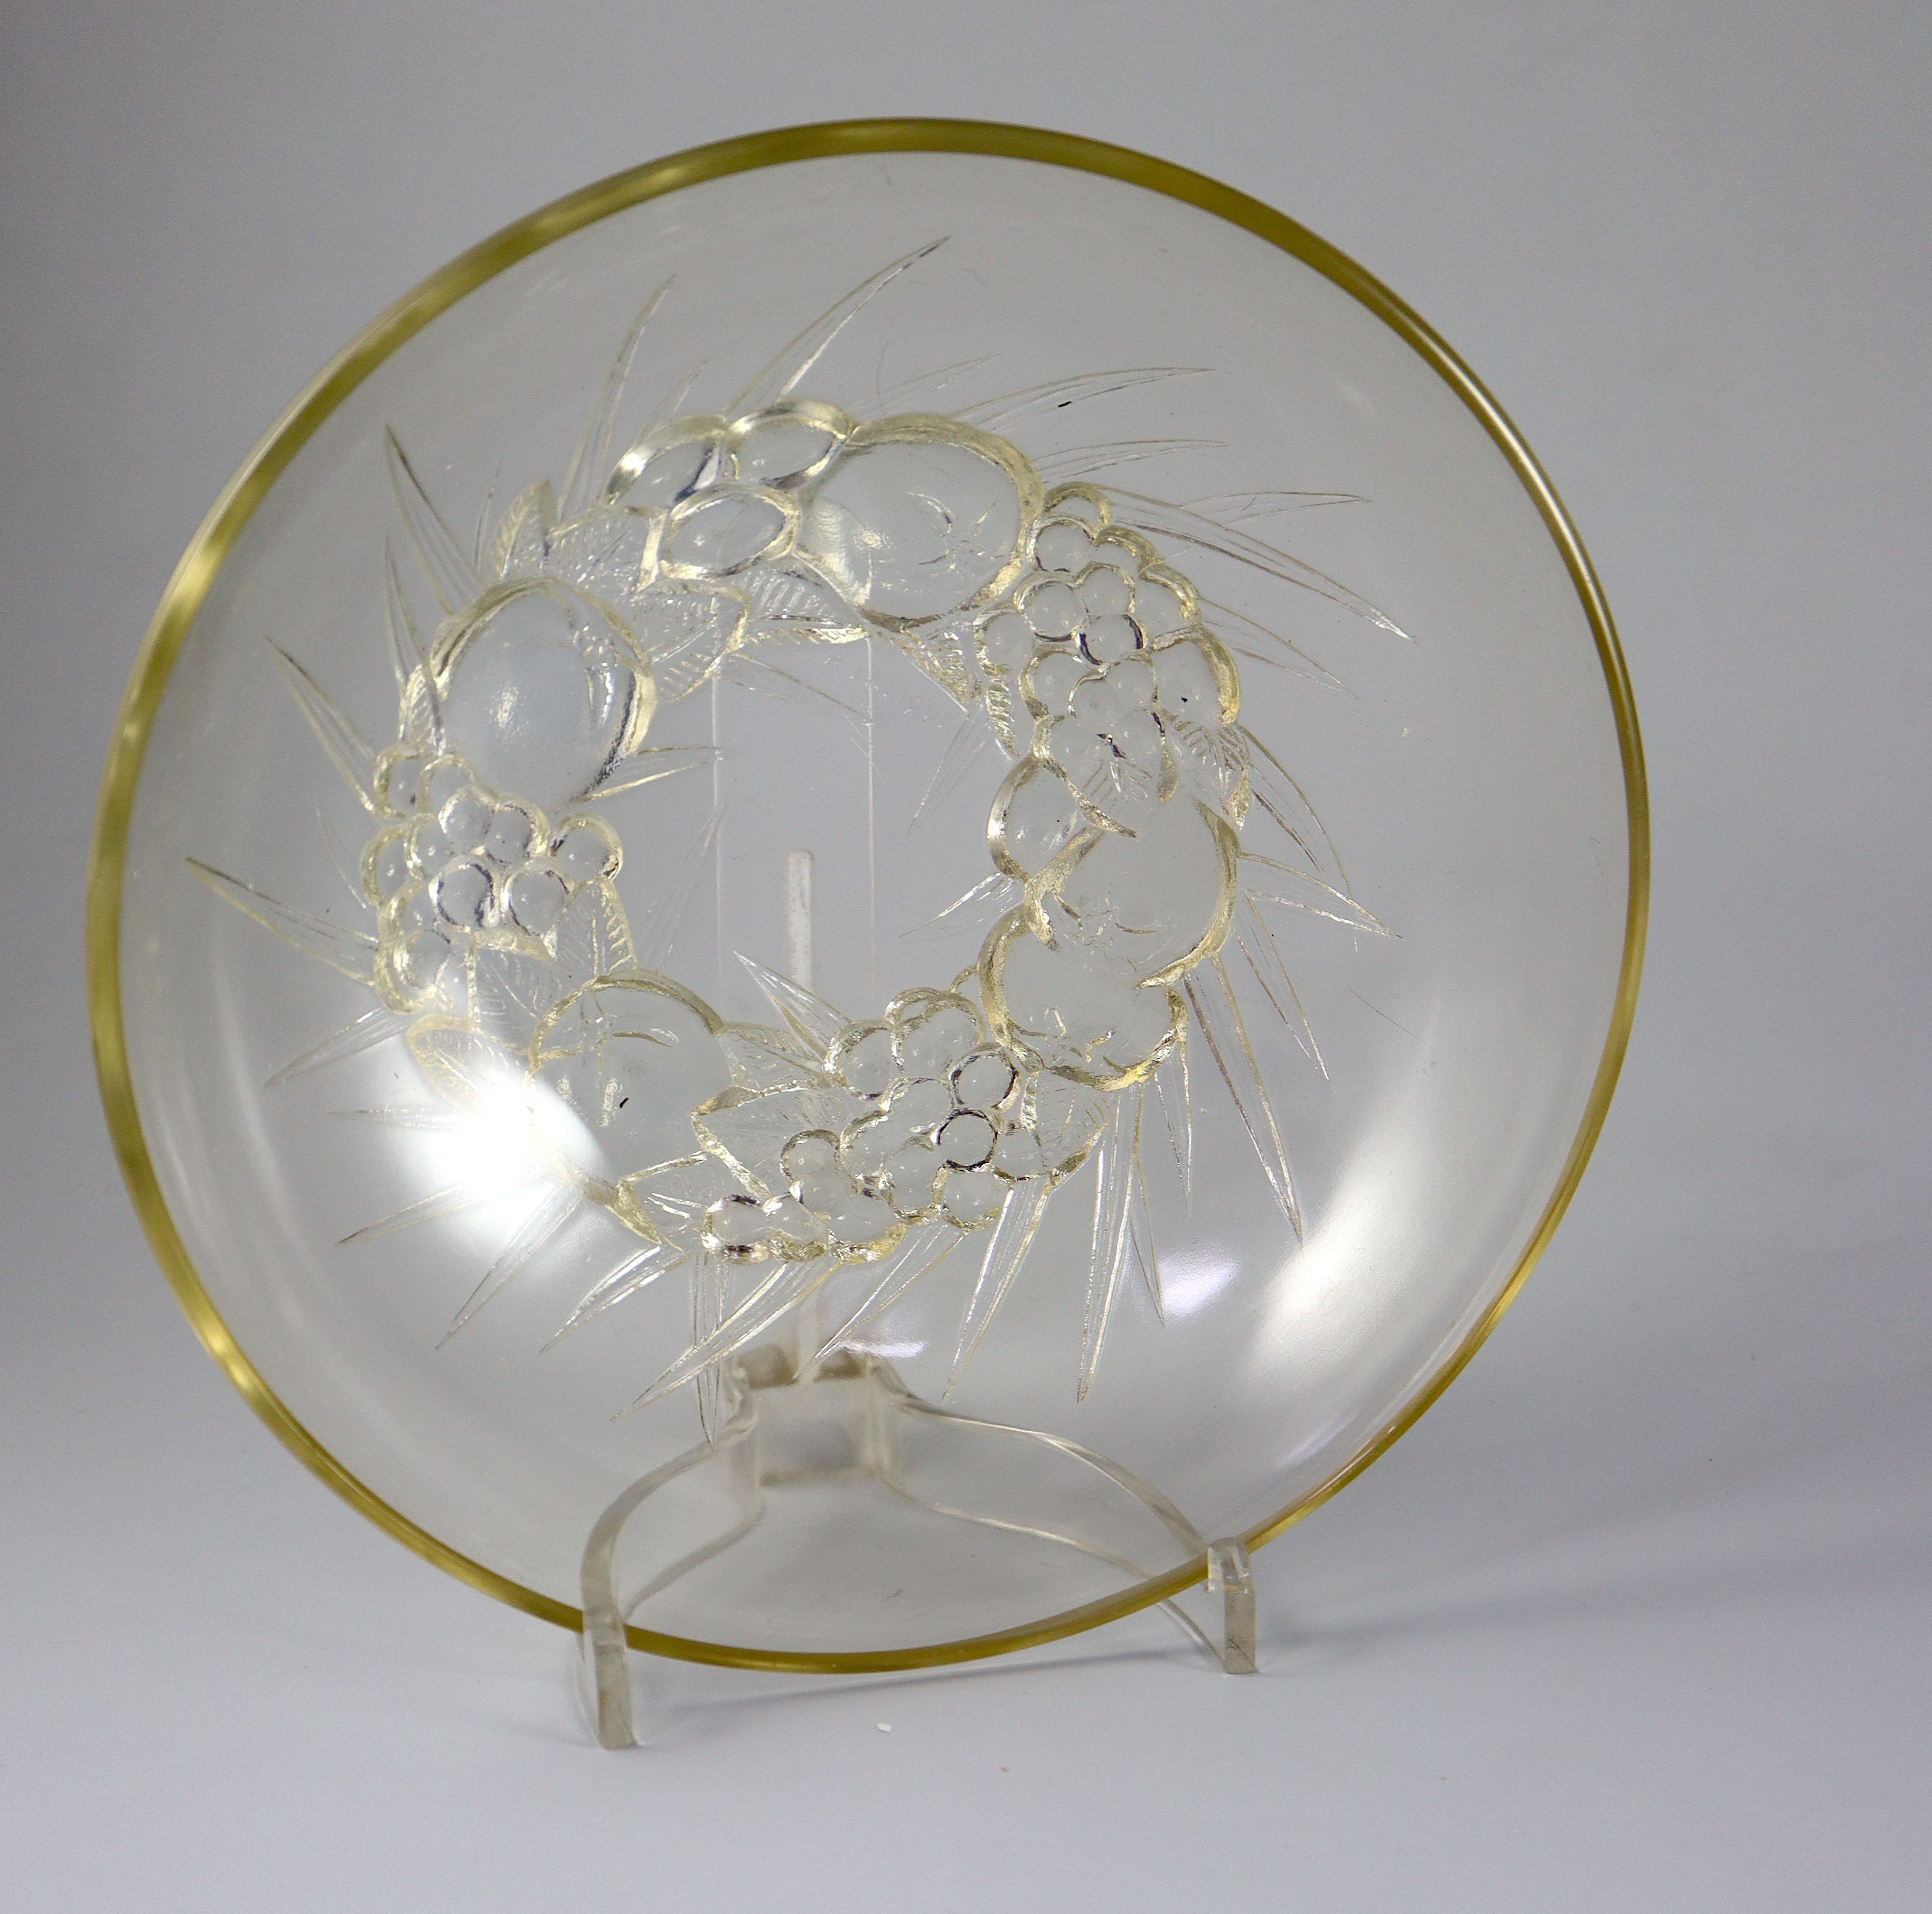 René Lalique. A pre-war amber tinted glass Mont-Dore pattern bowl, no.396, designed in 1928, 22cm diameter